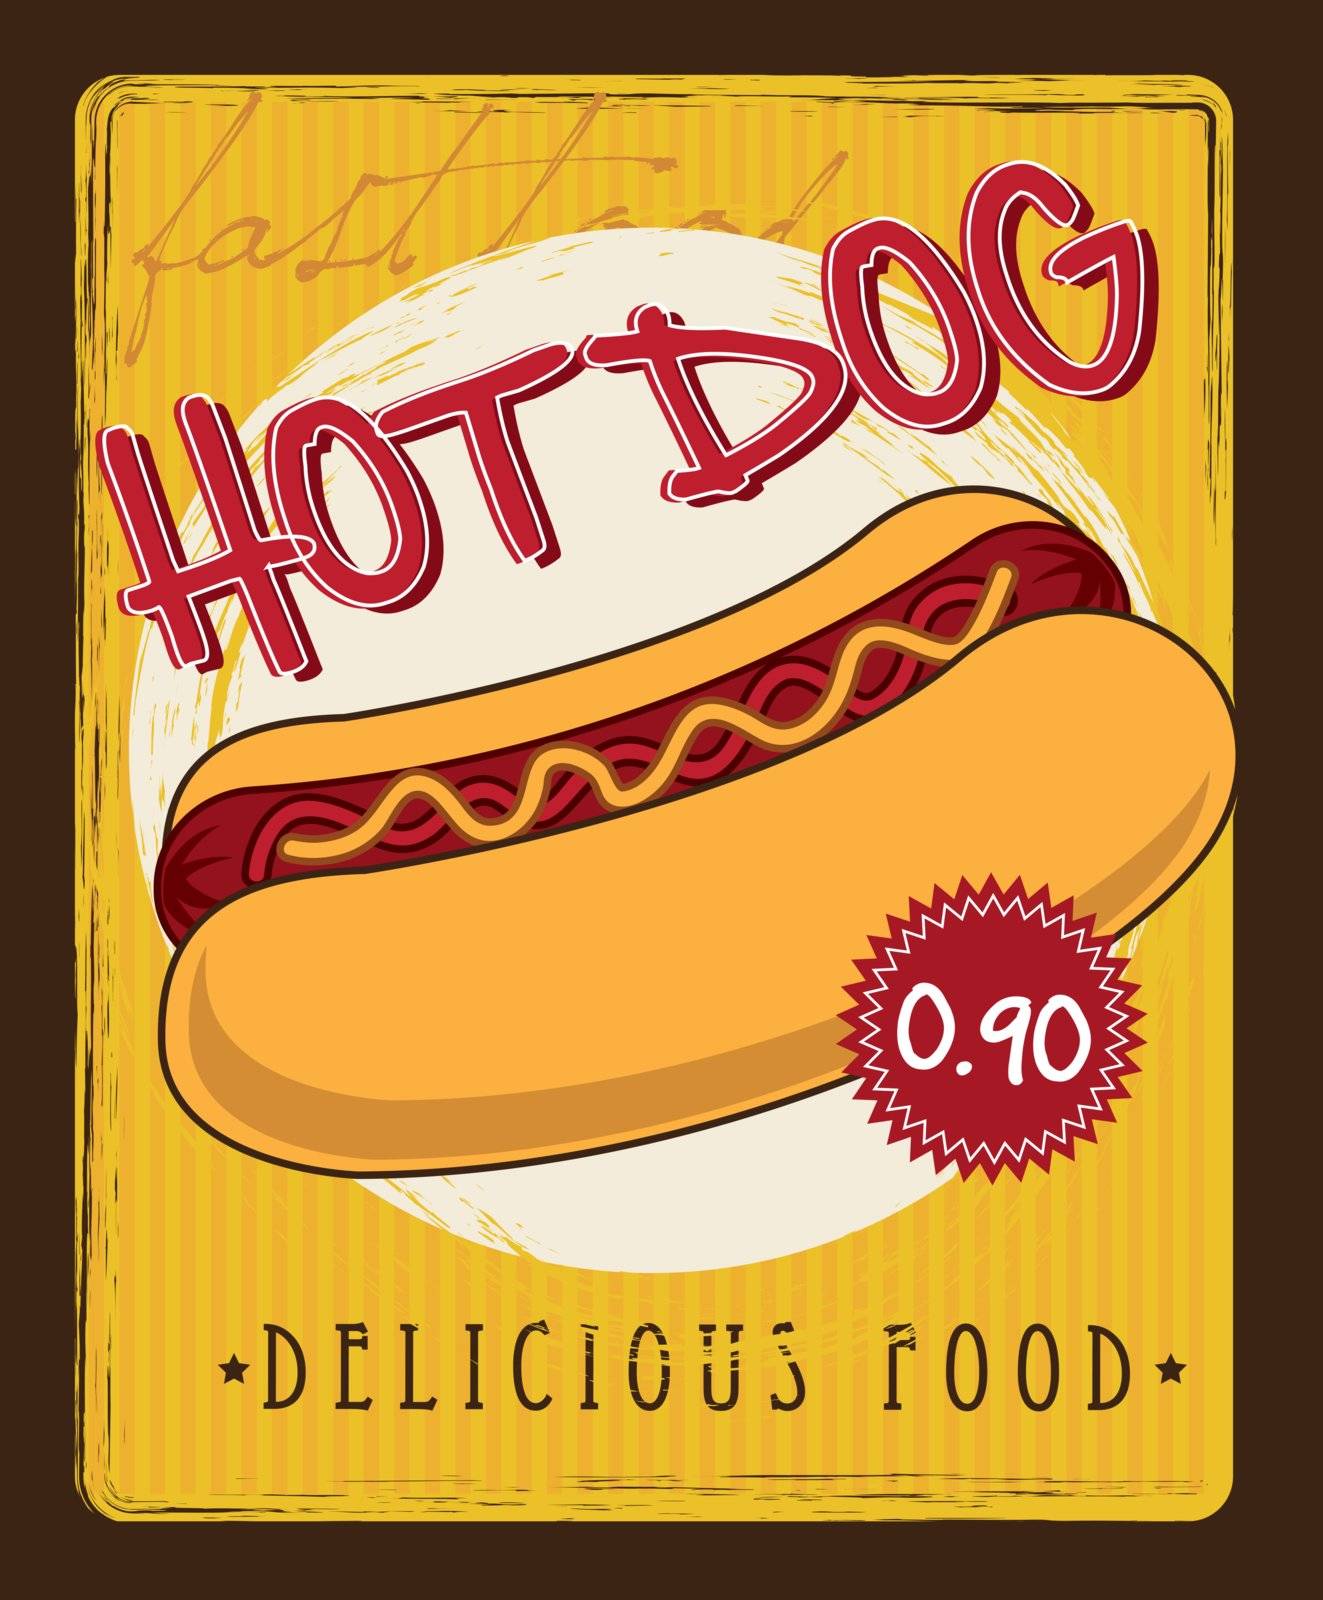 hot dog cartoon over yellow background. vector illustration